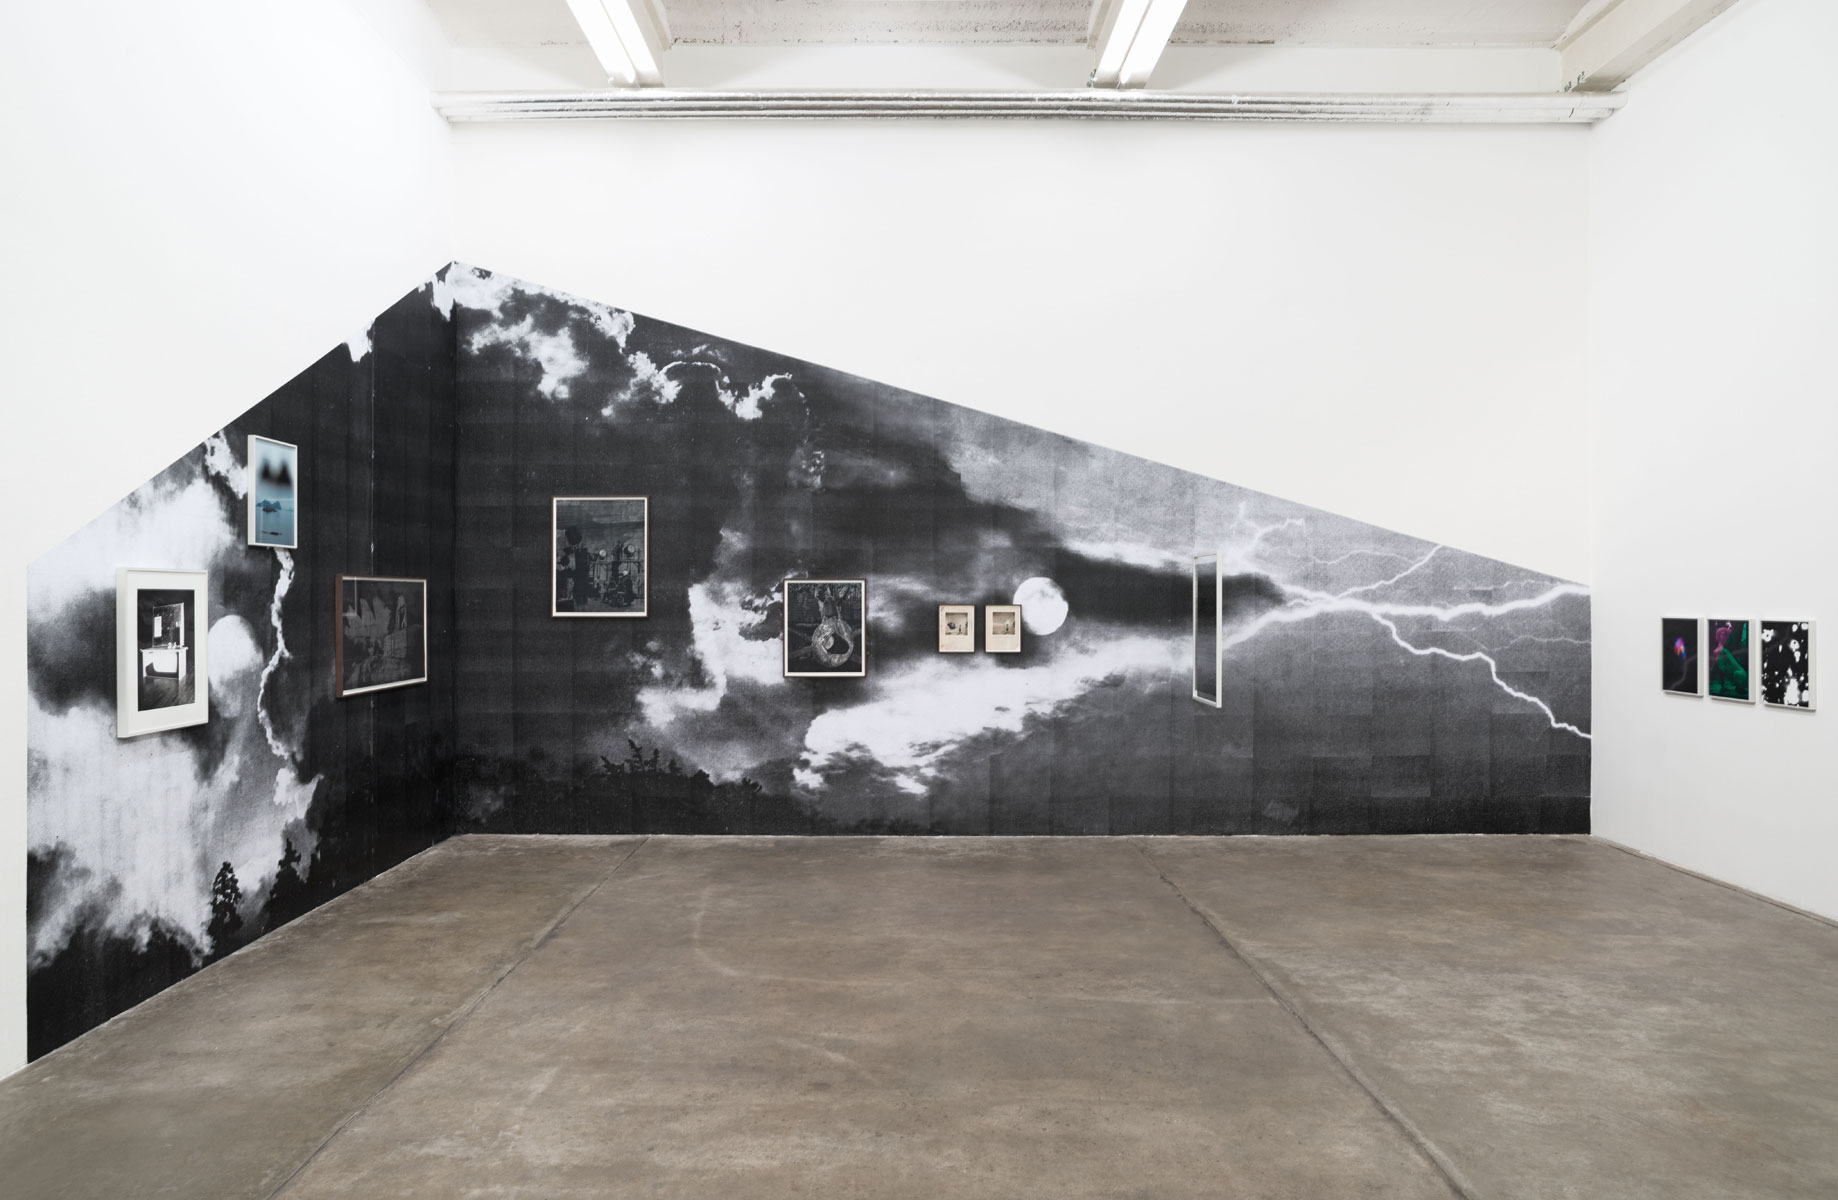 Wall paper in 'Folie à deux'<br>Galerie Kleindienst, 2014